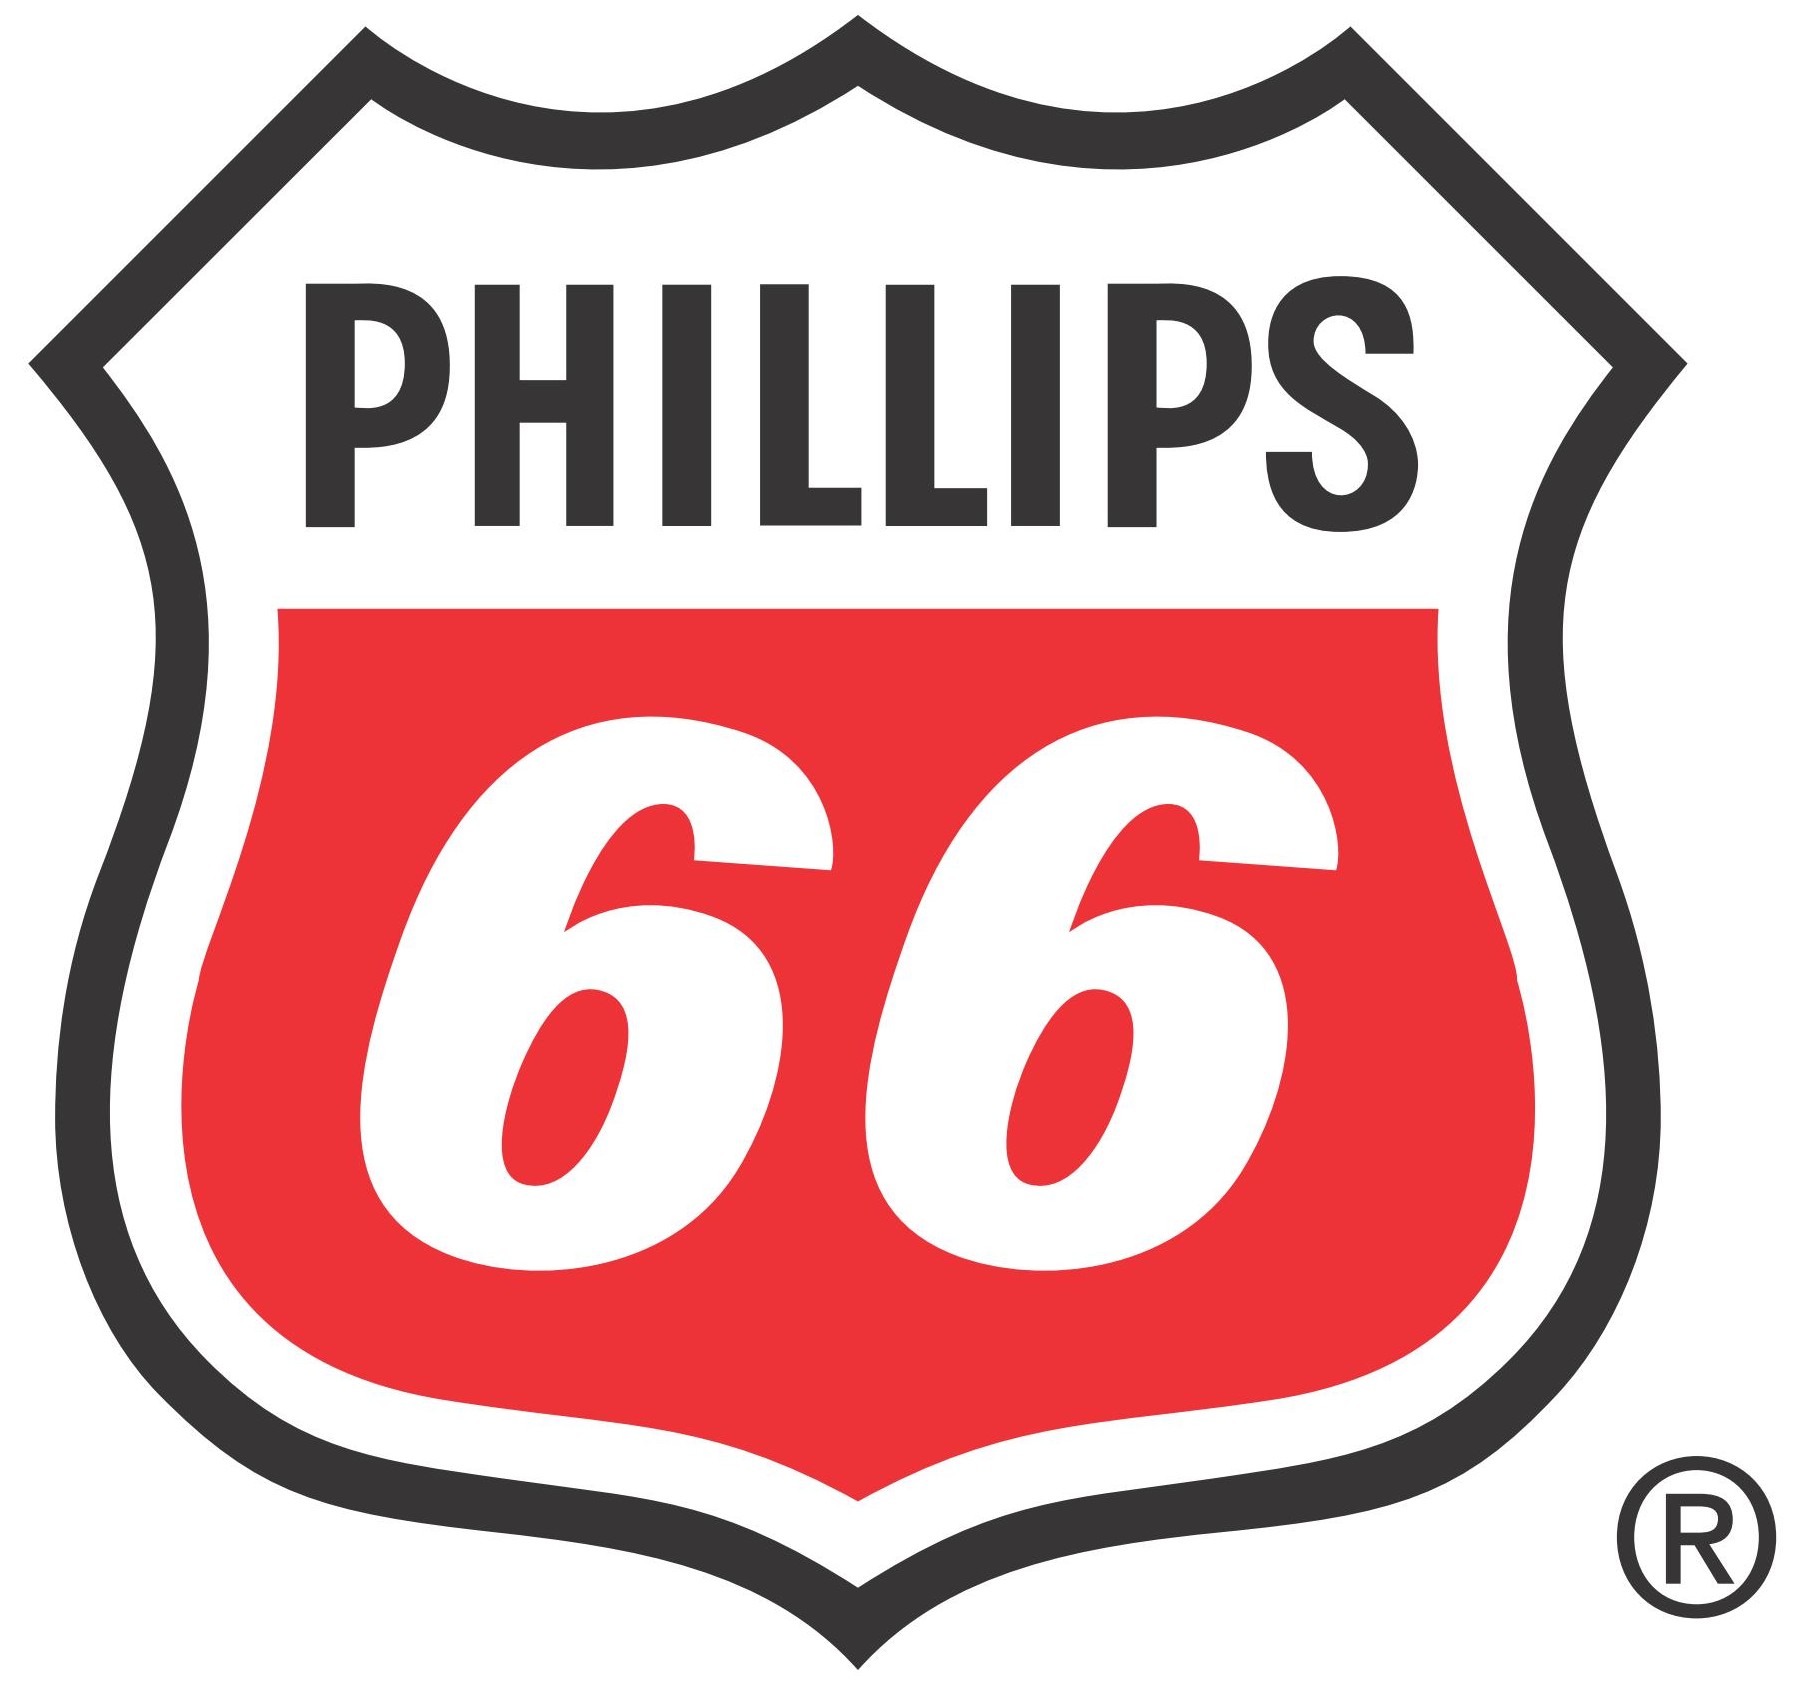 Philips 66 logo